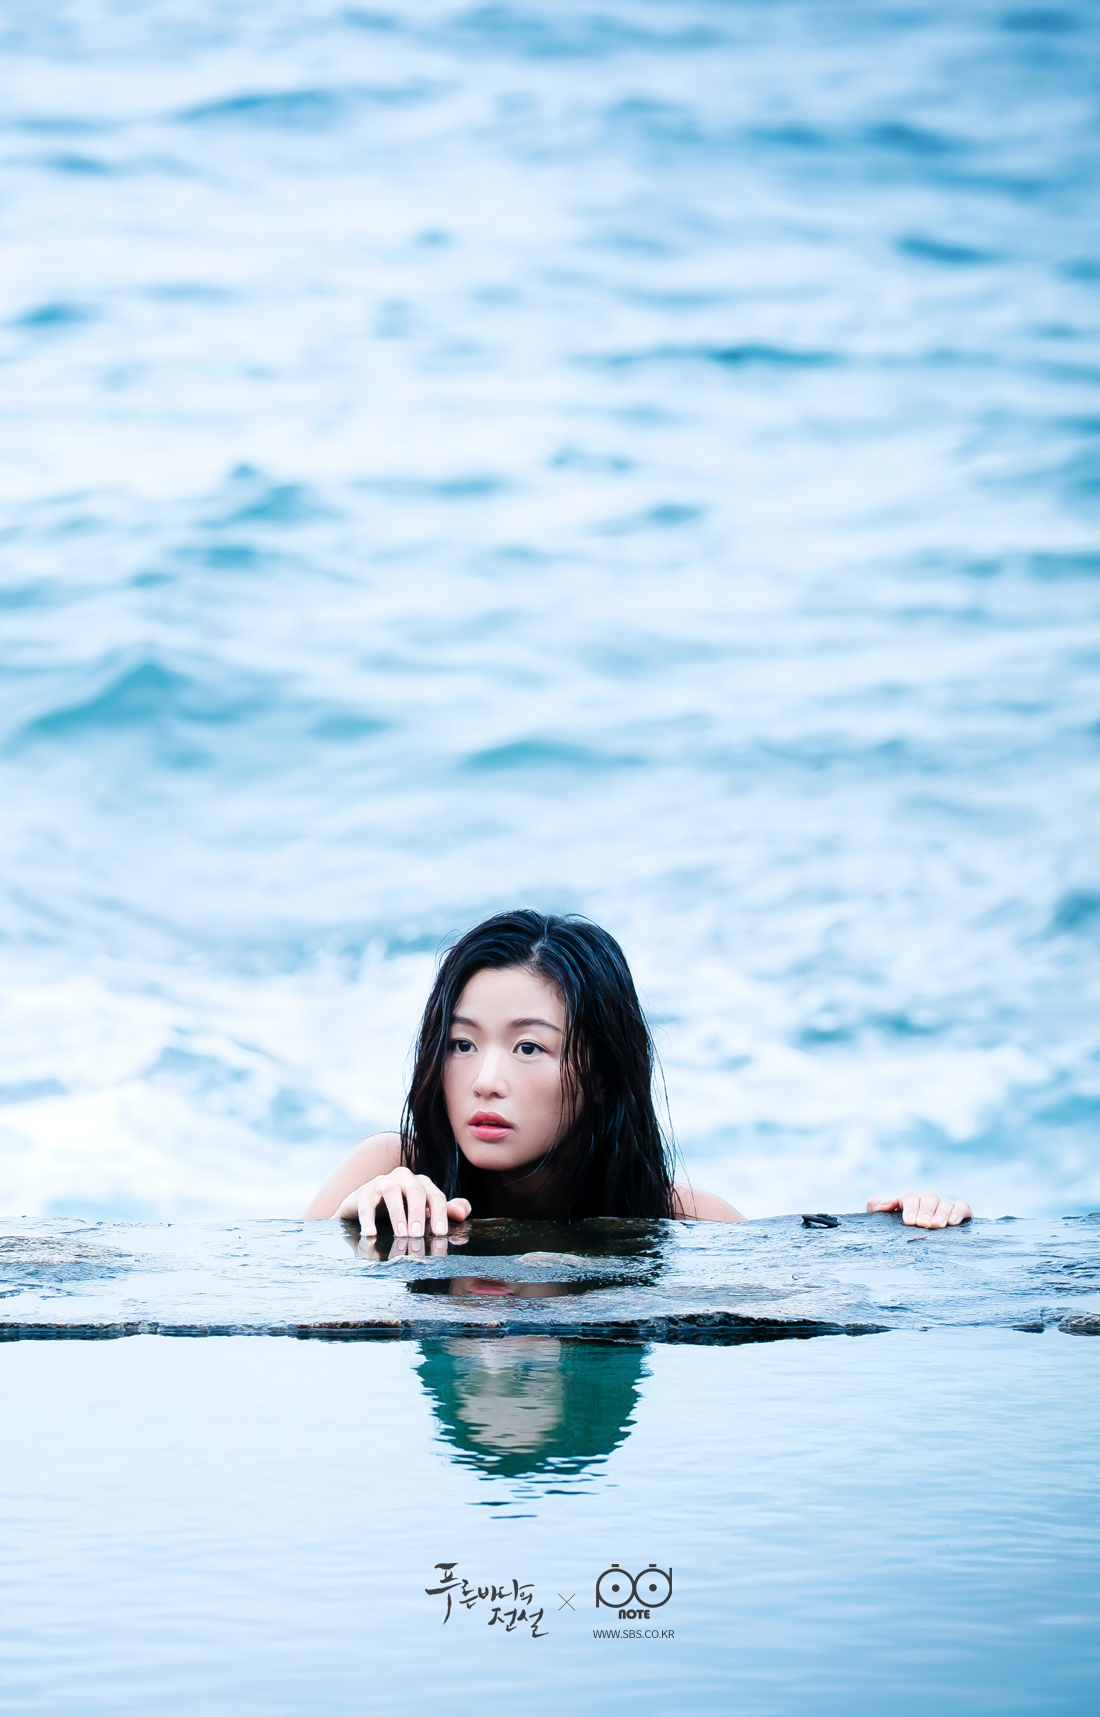 Jeon ji hyun Jun ji hyun 2016 legend of the blue sea Legend of